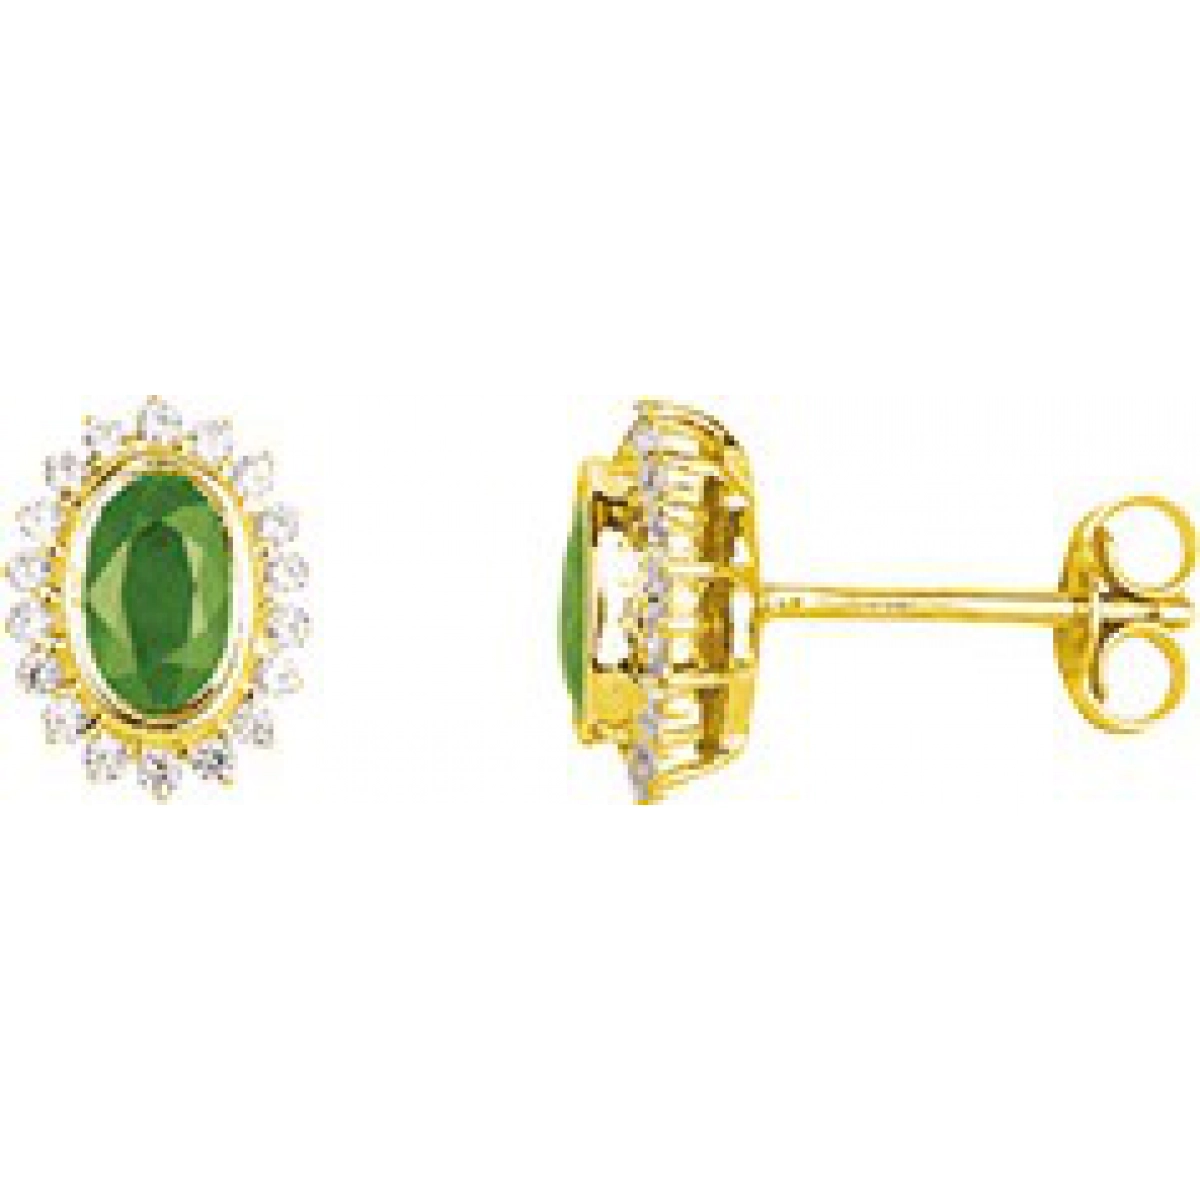 Earrings pair w. emerald, cz and rhod 18K YG  Lua Blanca  2.3063.E3.0